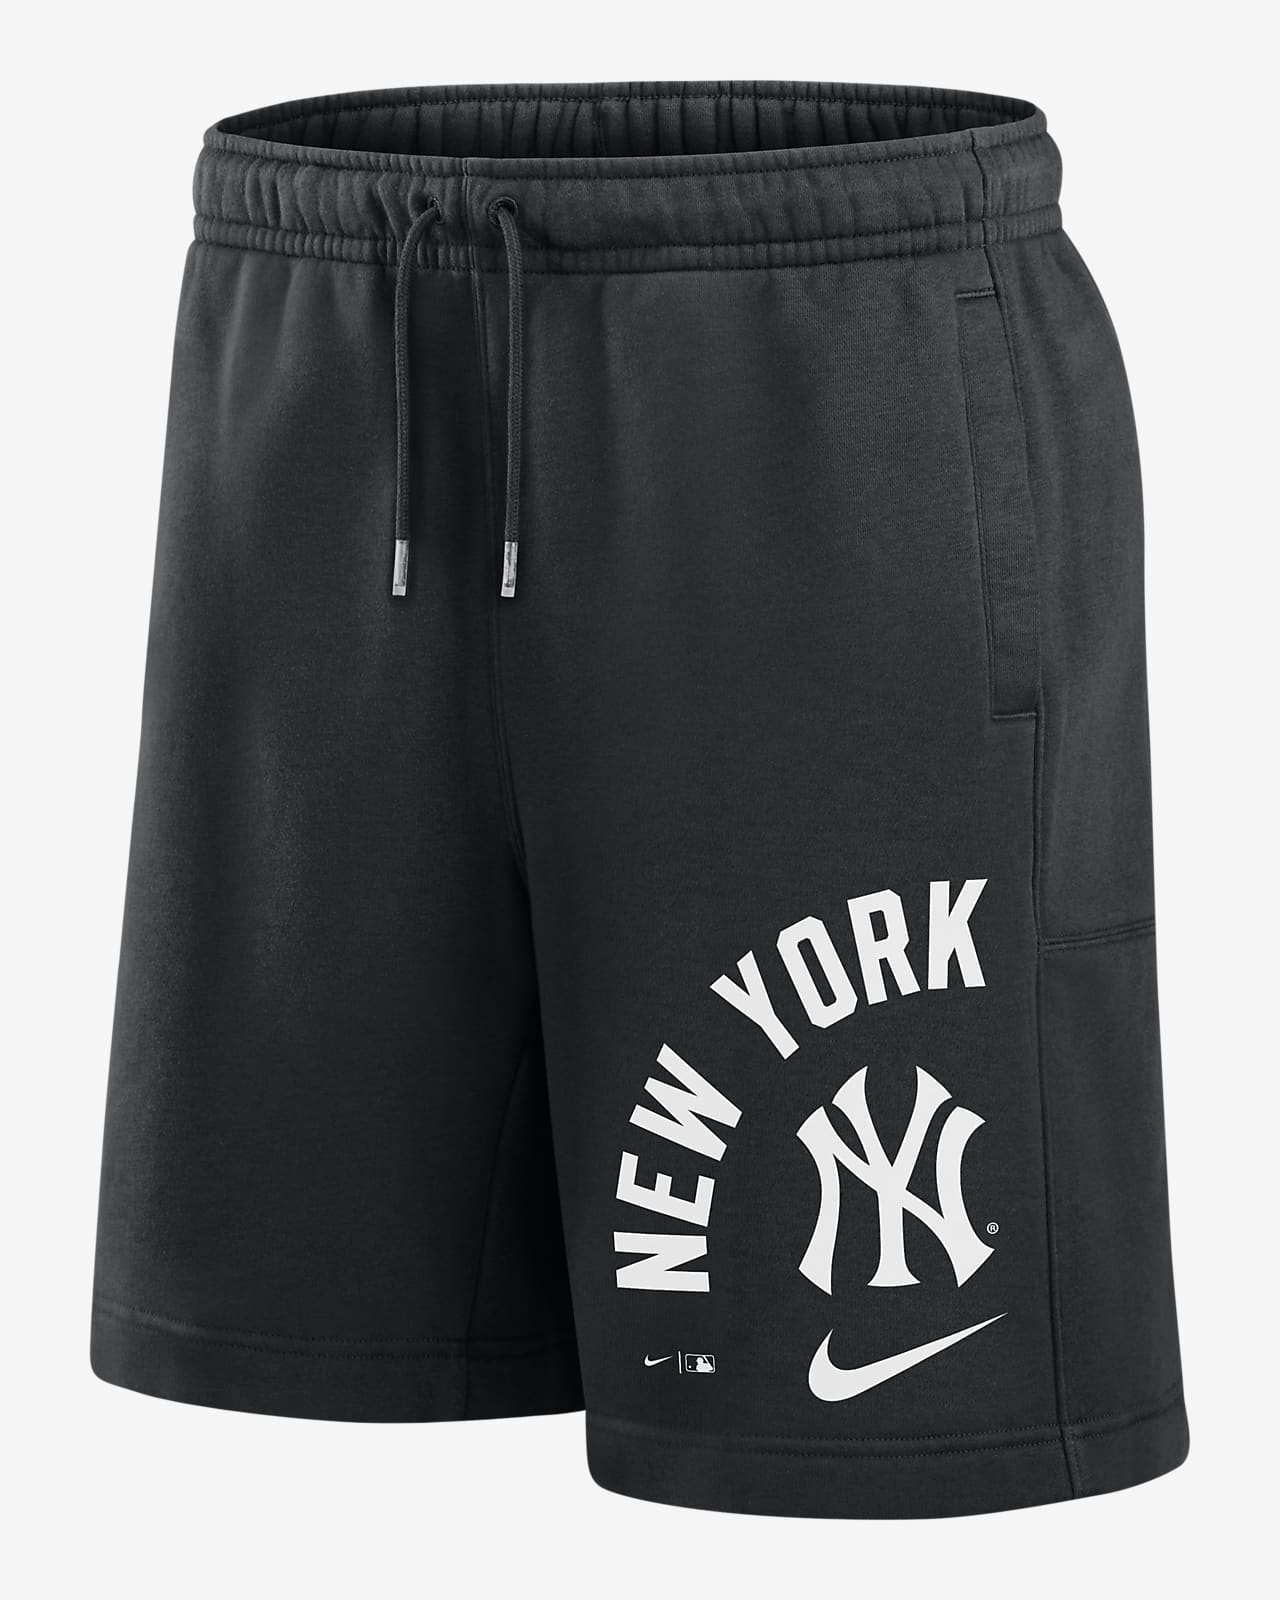 Shorts Nike de la MLB para hombre New York Yankees Arched Kicker